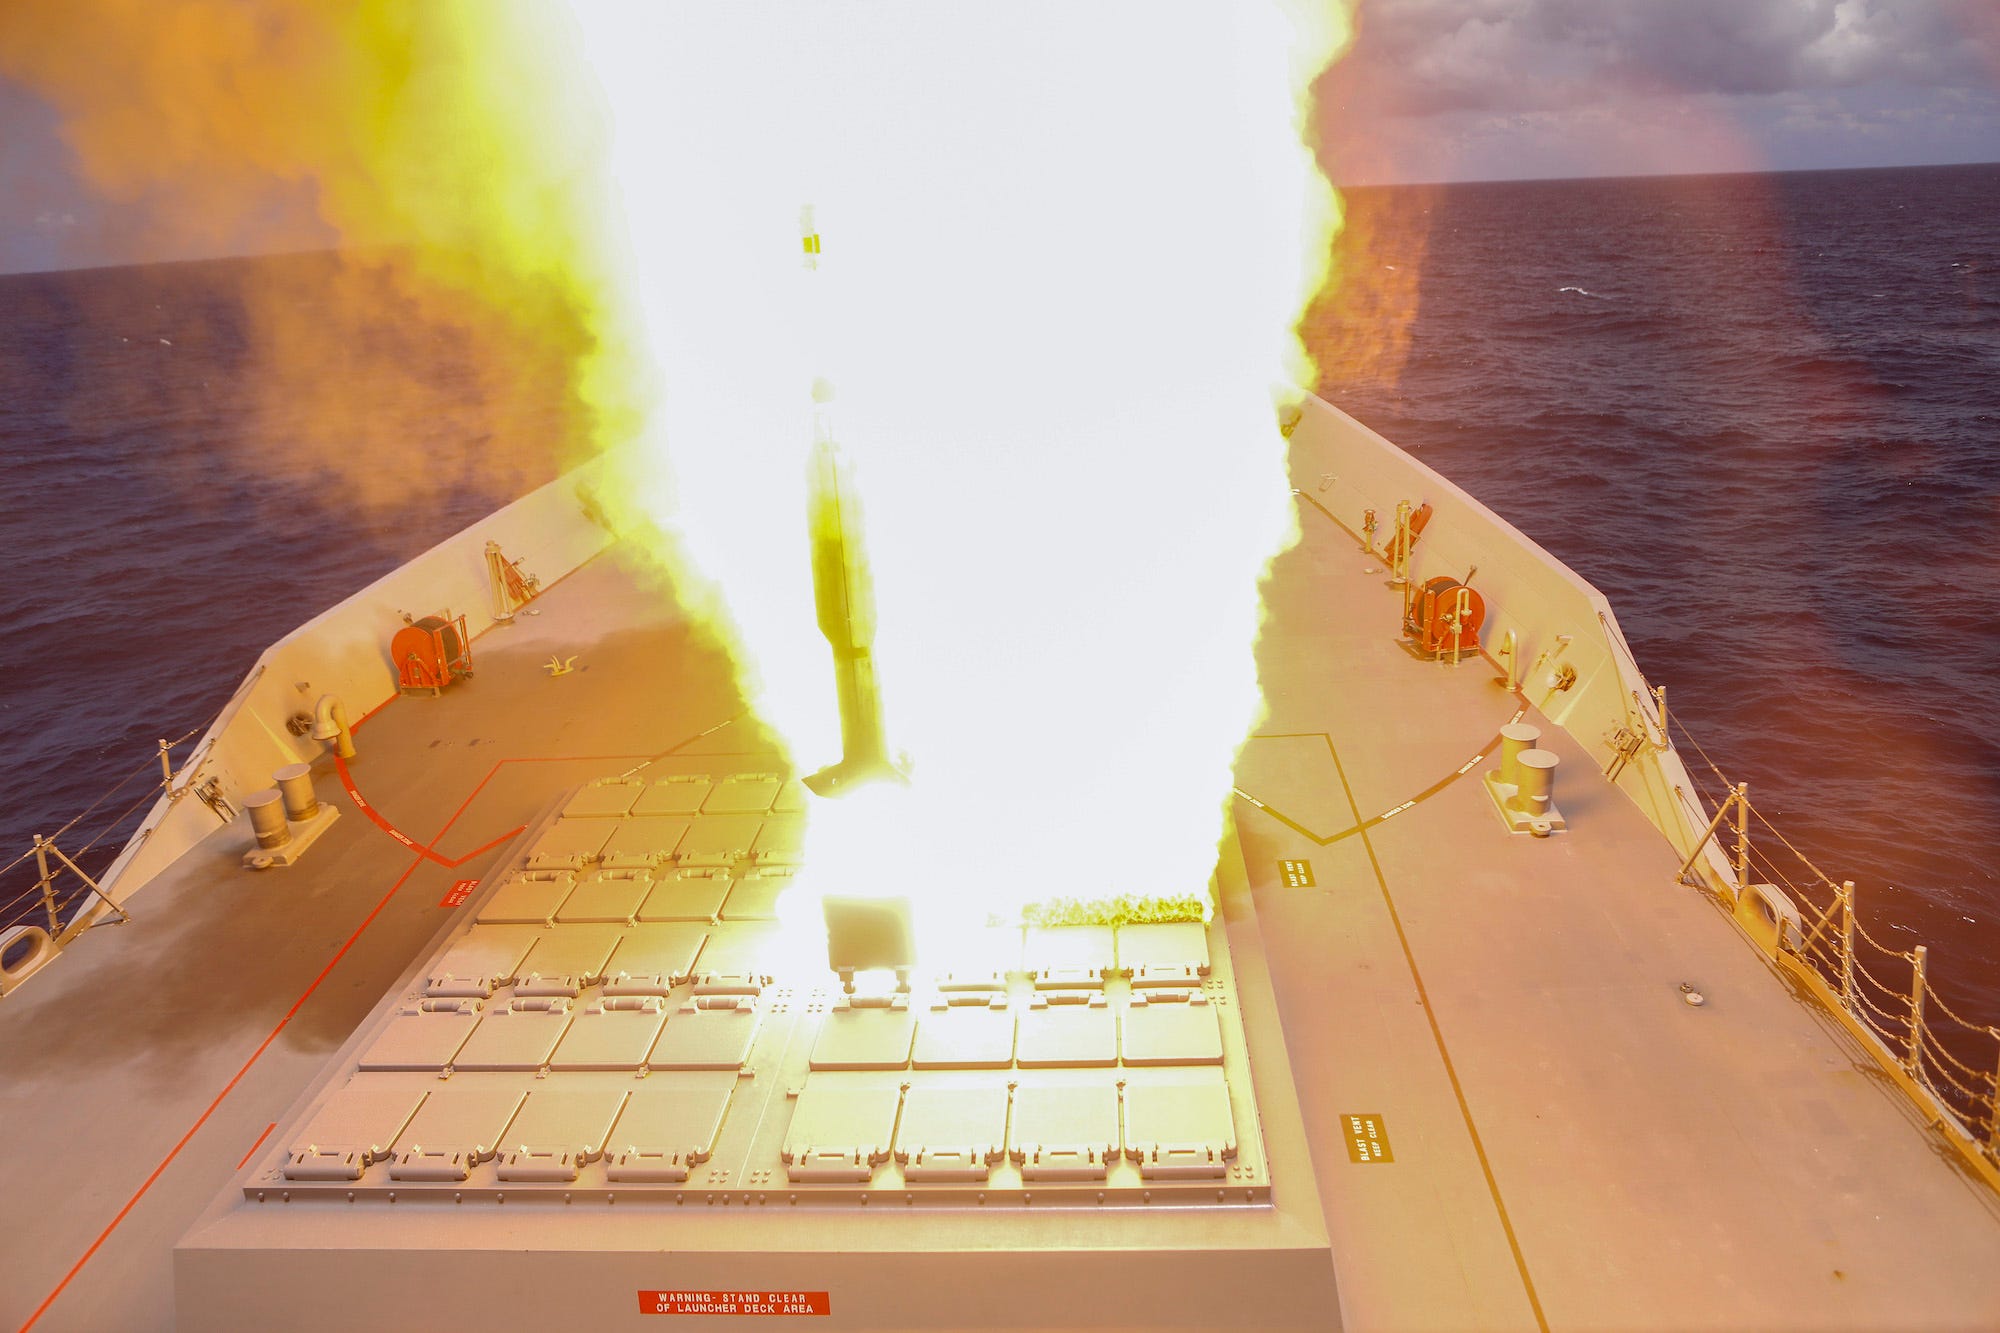 Australia navy SM-2 missile